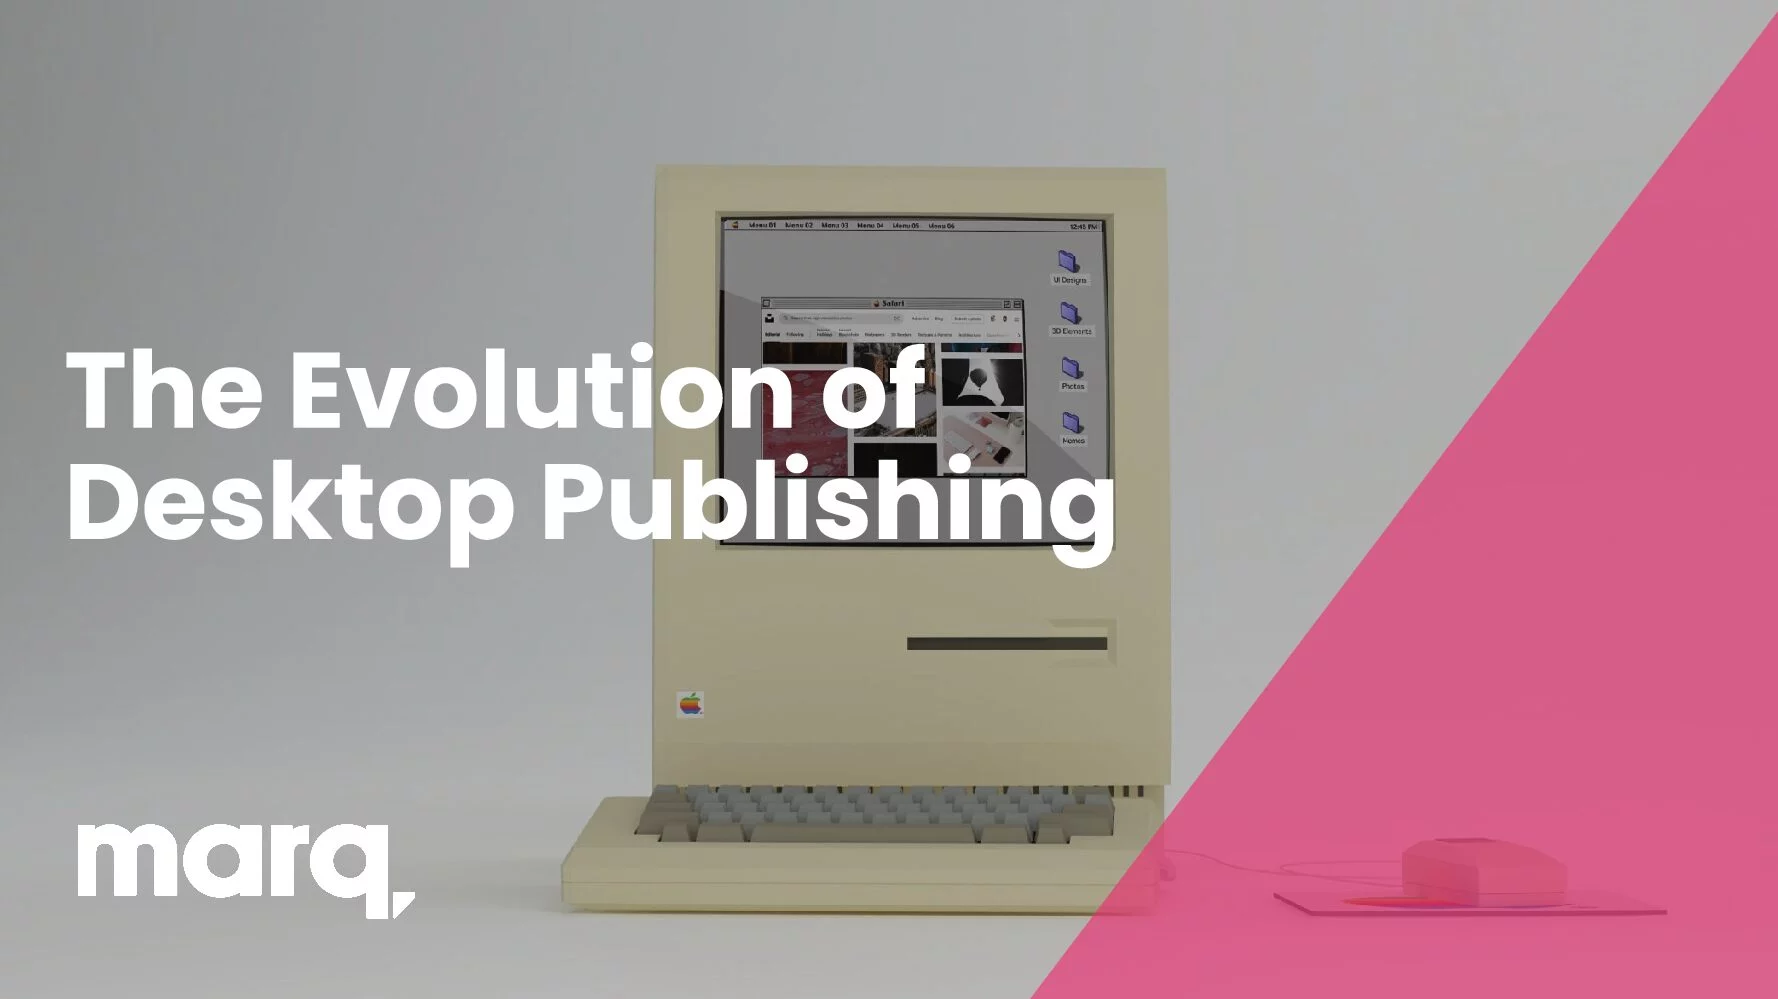 The history of desktop publishing